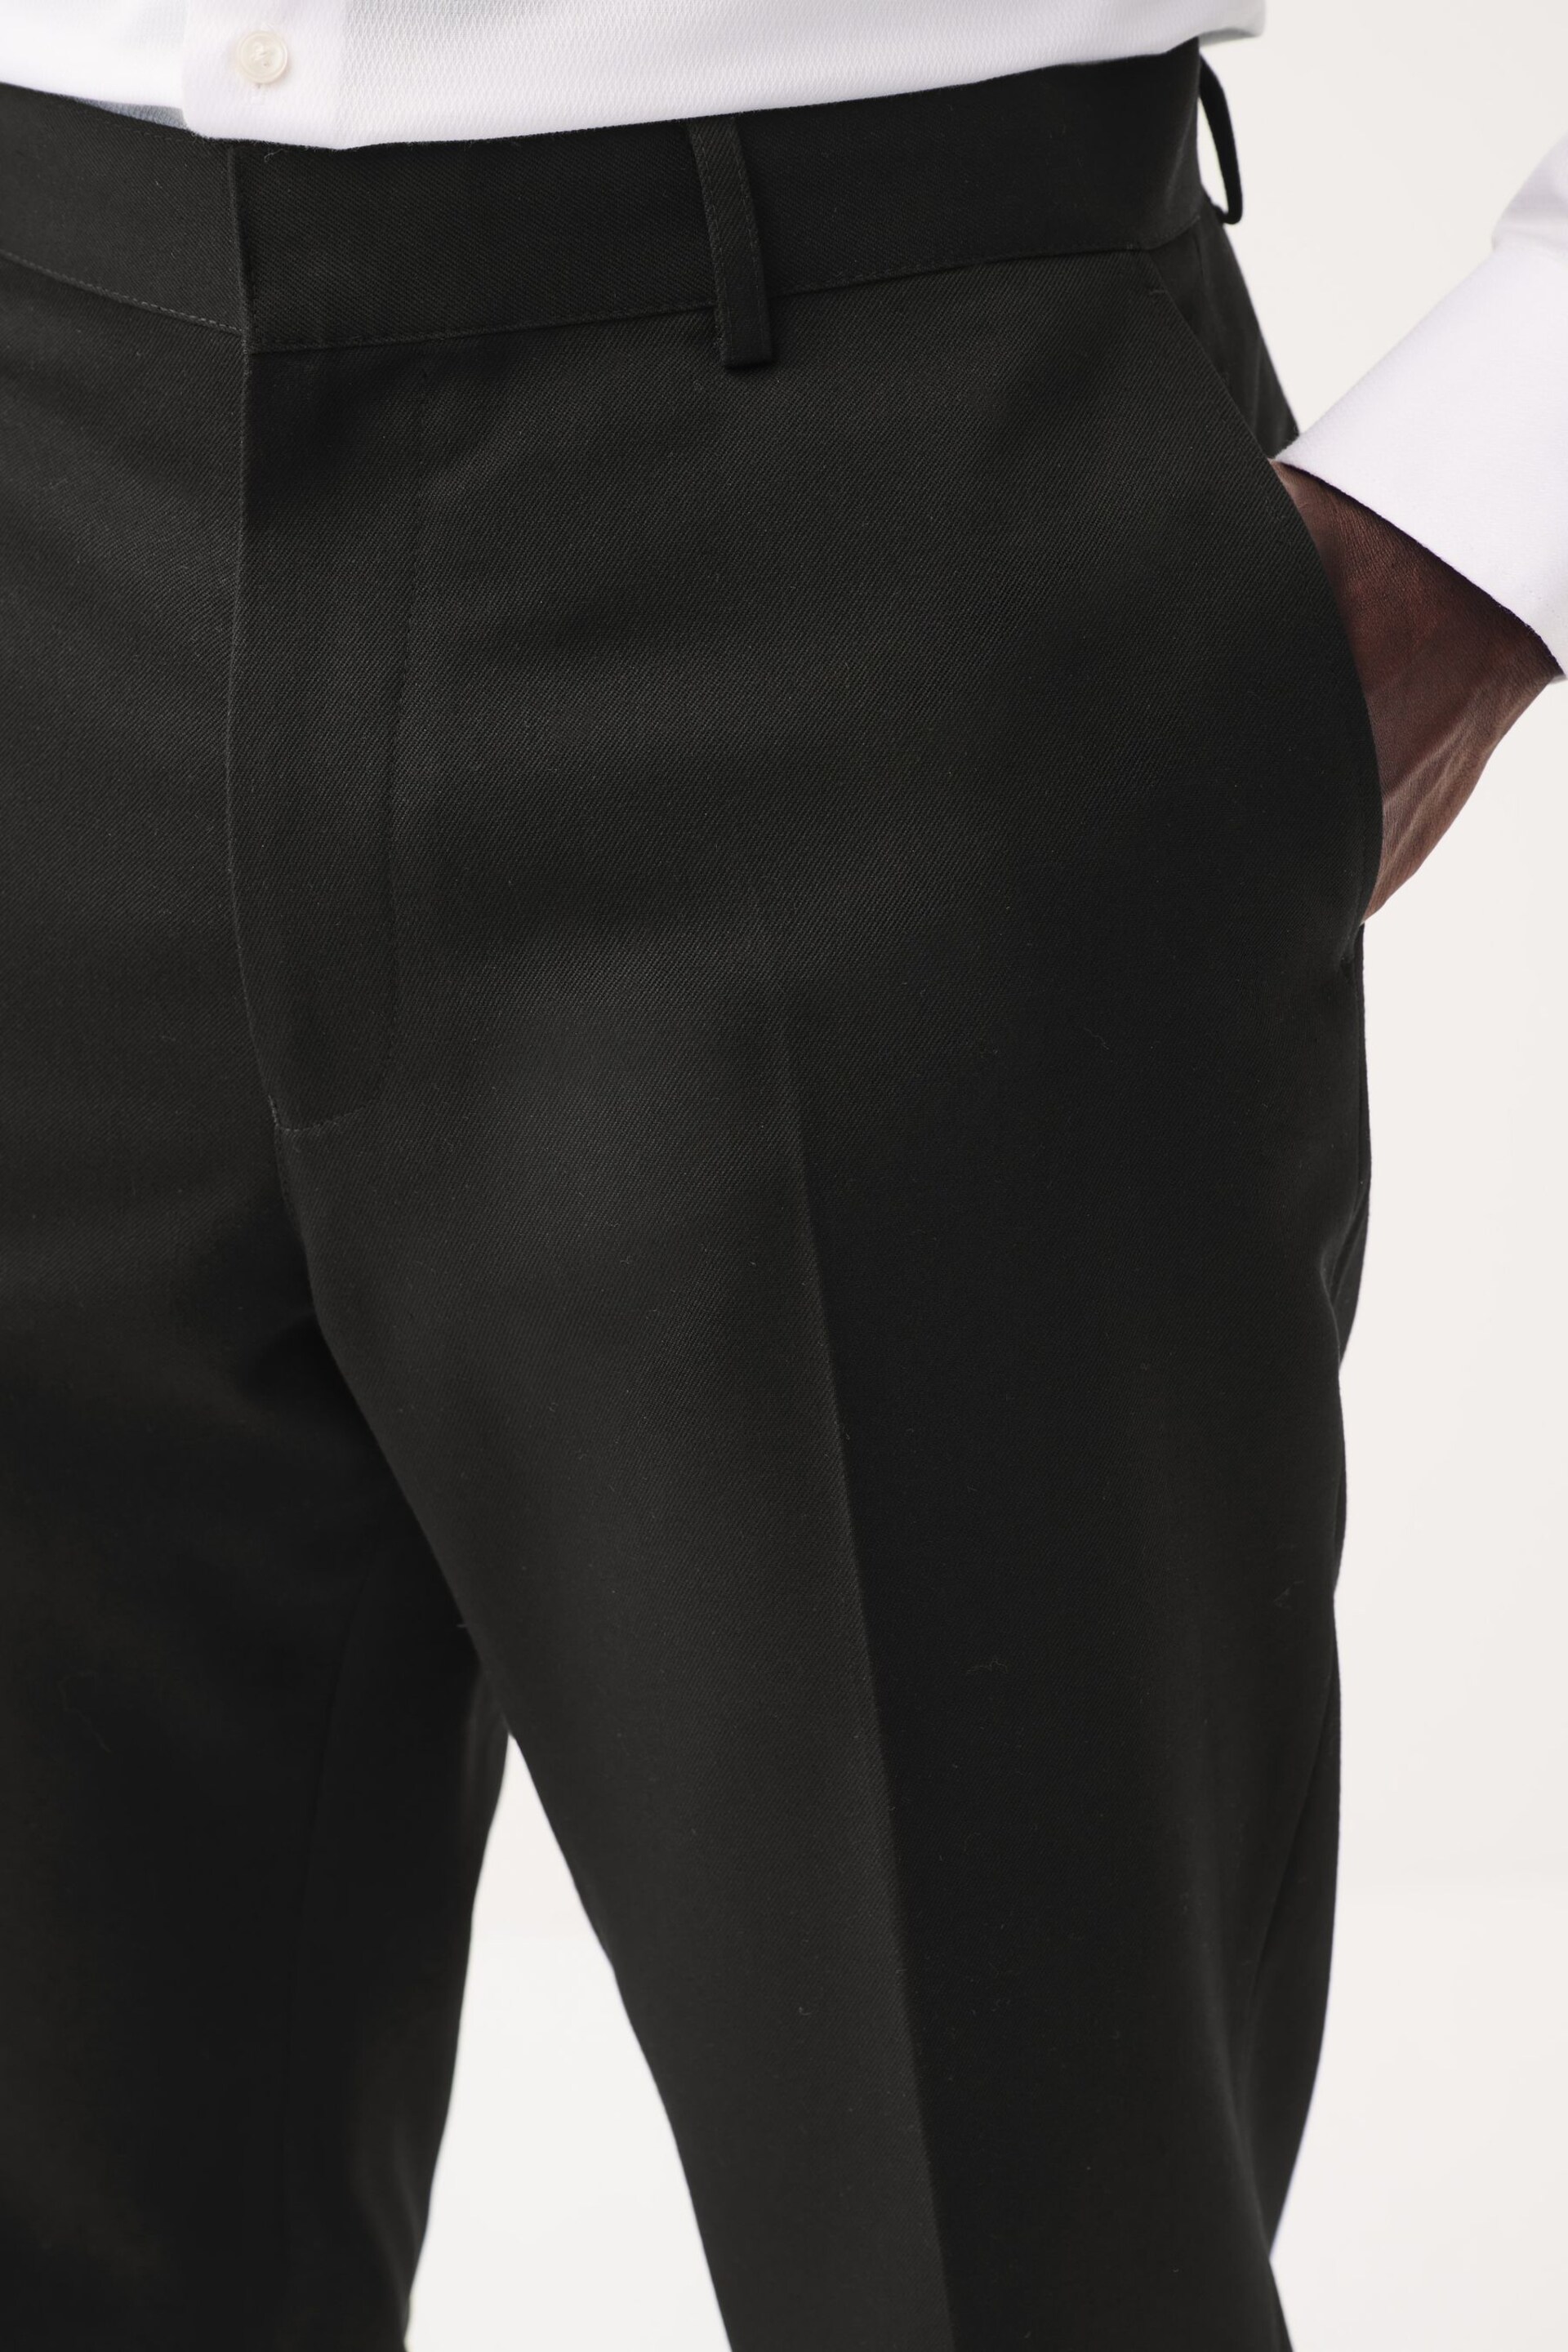 Black Plain Front Smart Trousers - Image 5 of 8